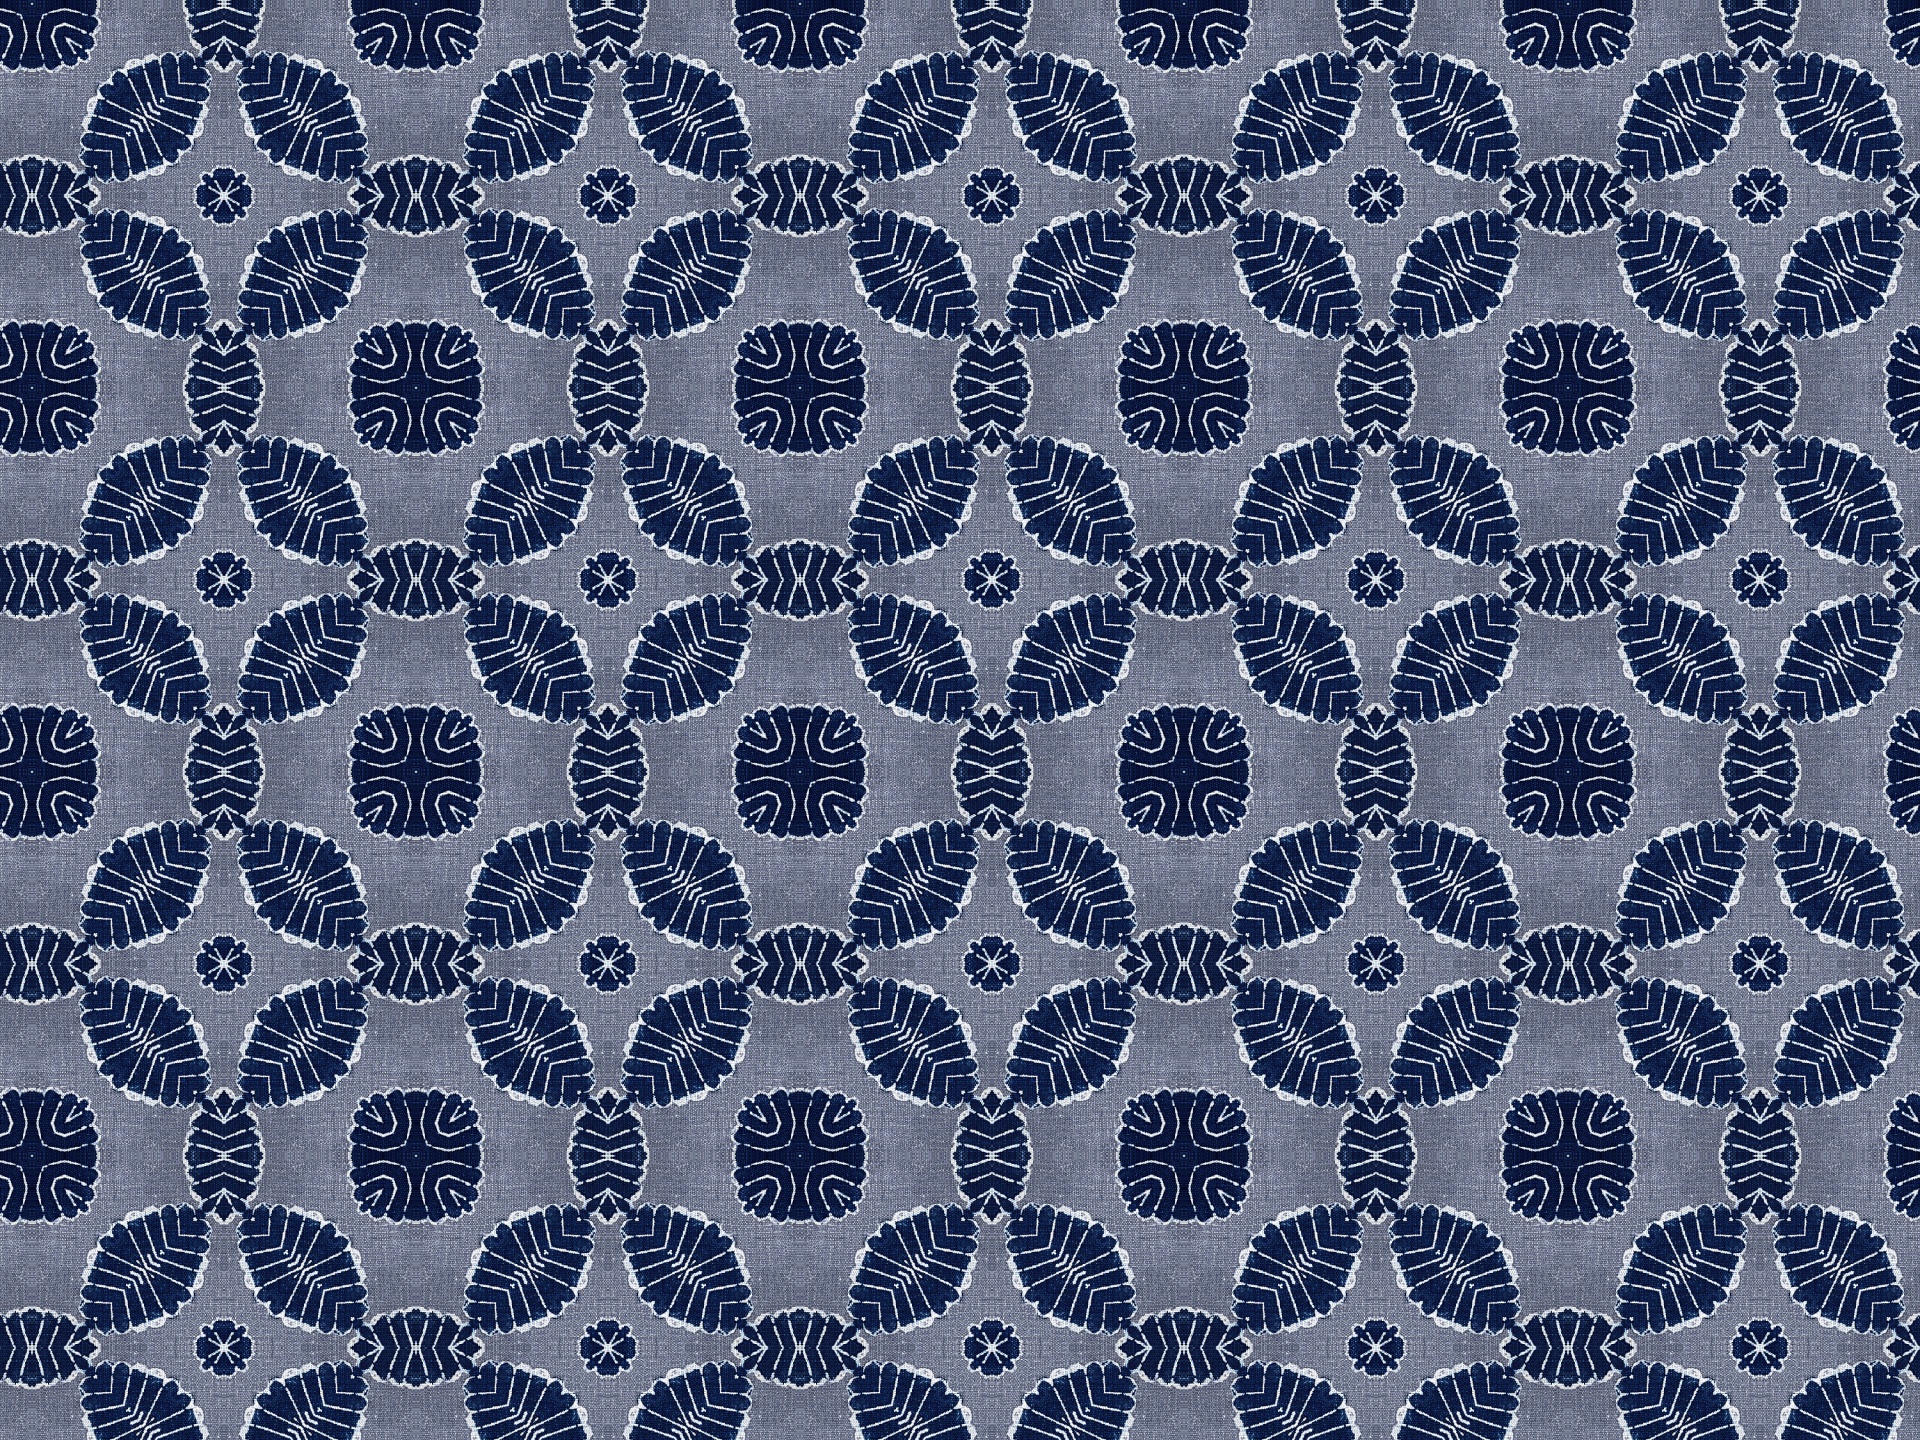 Fabric Pattern Background 4